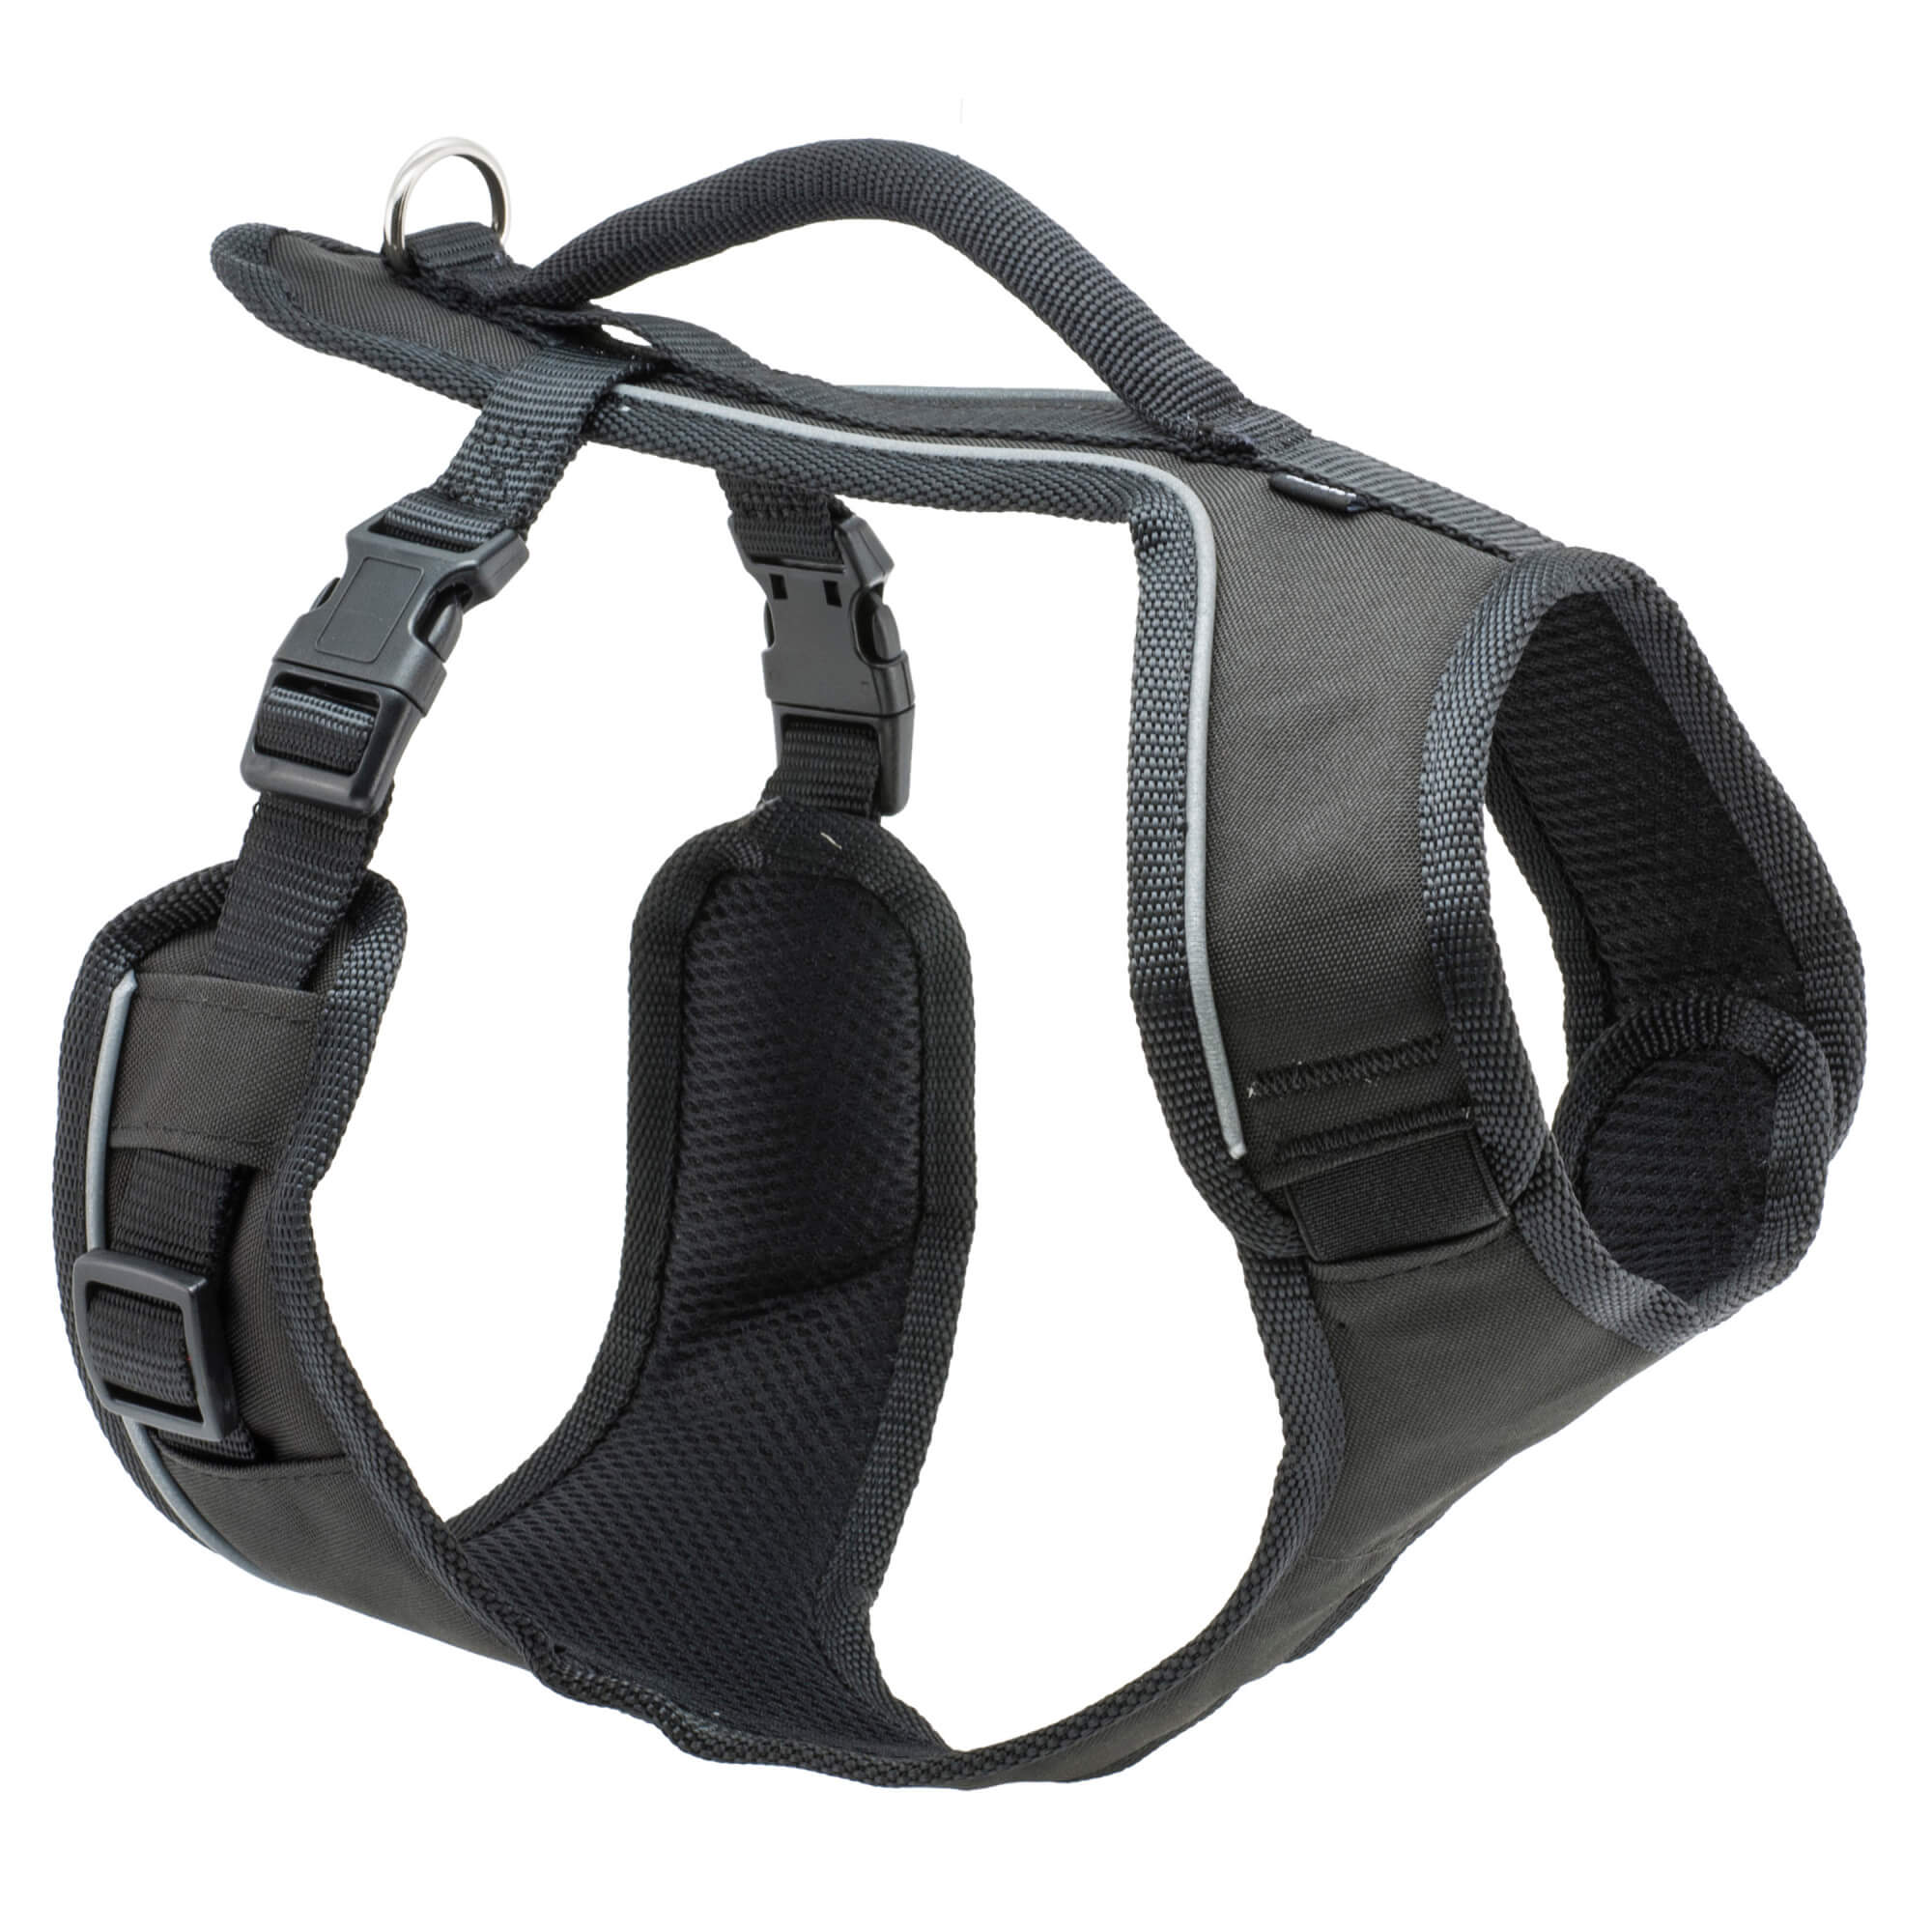 Black petsafe easysport harness in large